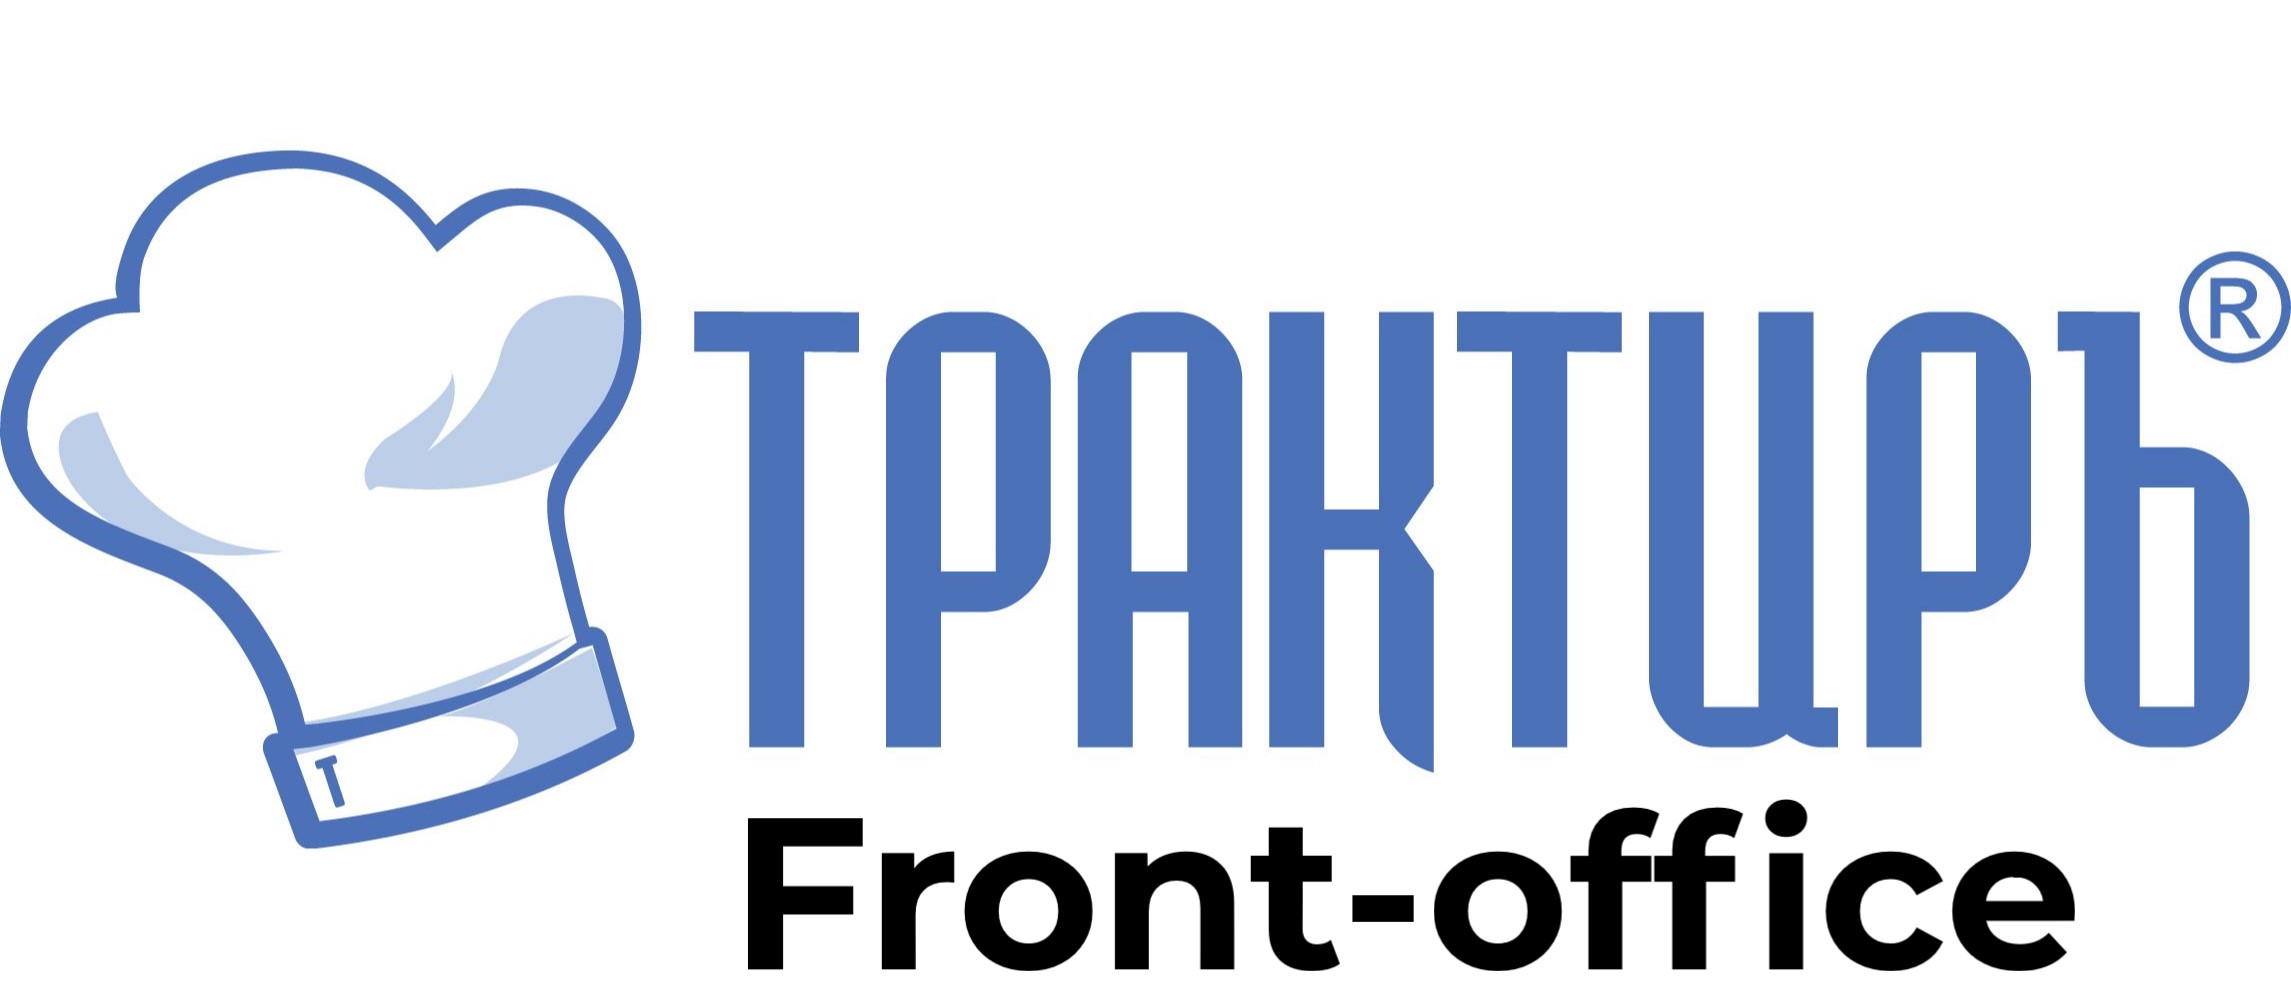 Трактиръ: Front-Office v4.5  Основная поставка в Томске